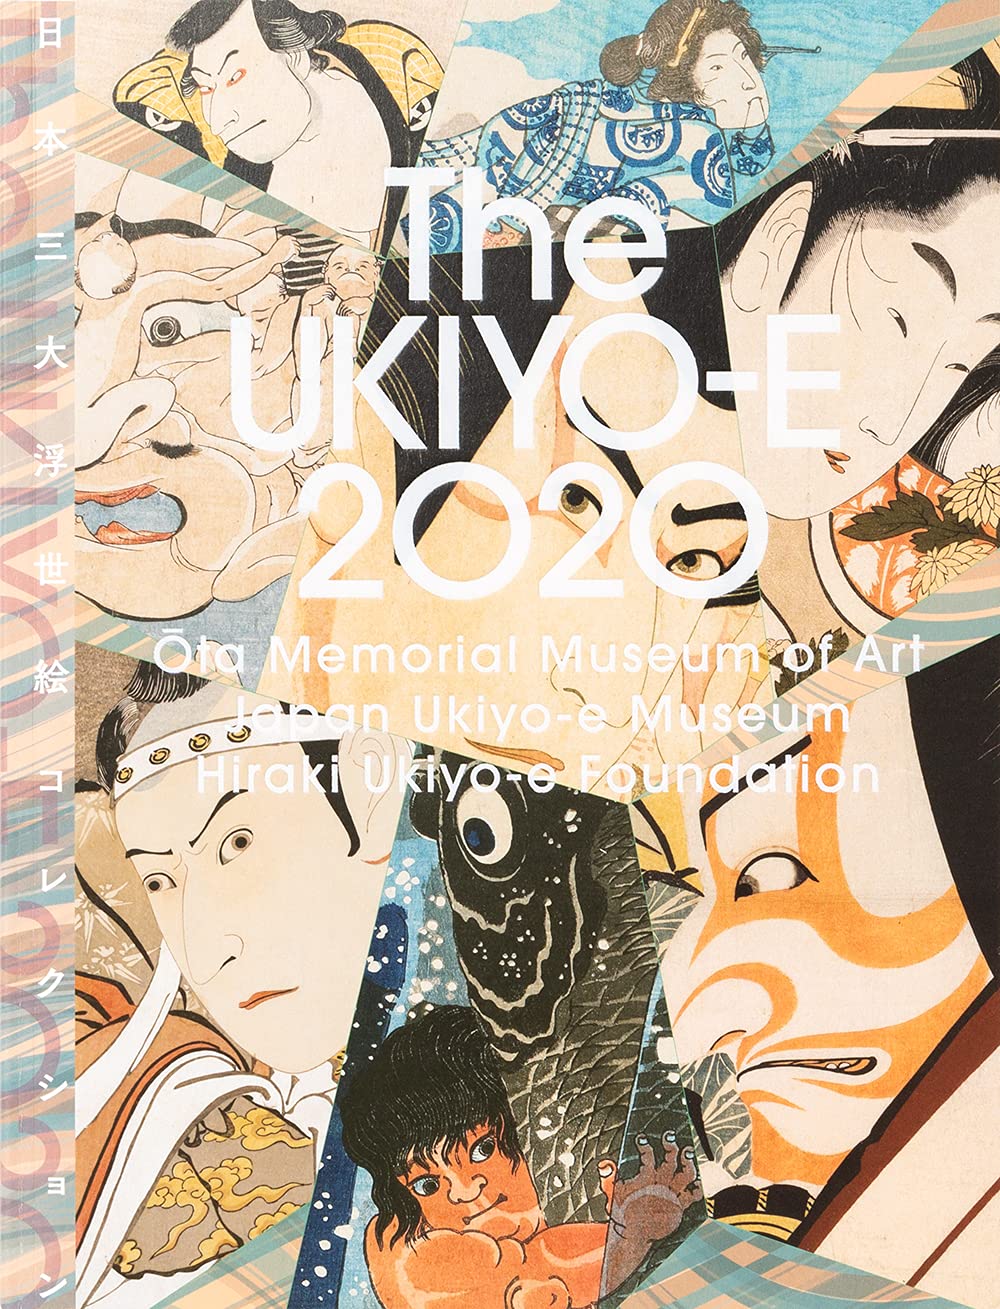 The UKIYO-E 2020 | Ota Memorial Museum of Art, Japan Ukiyo-e Museum, Hiraki Ukiyo-e Foundation